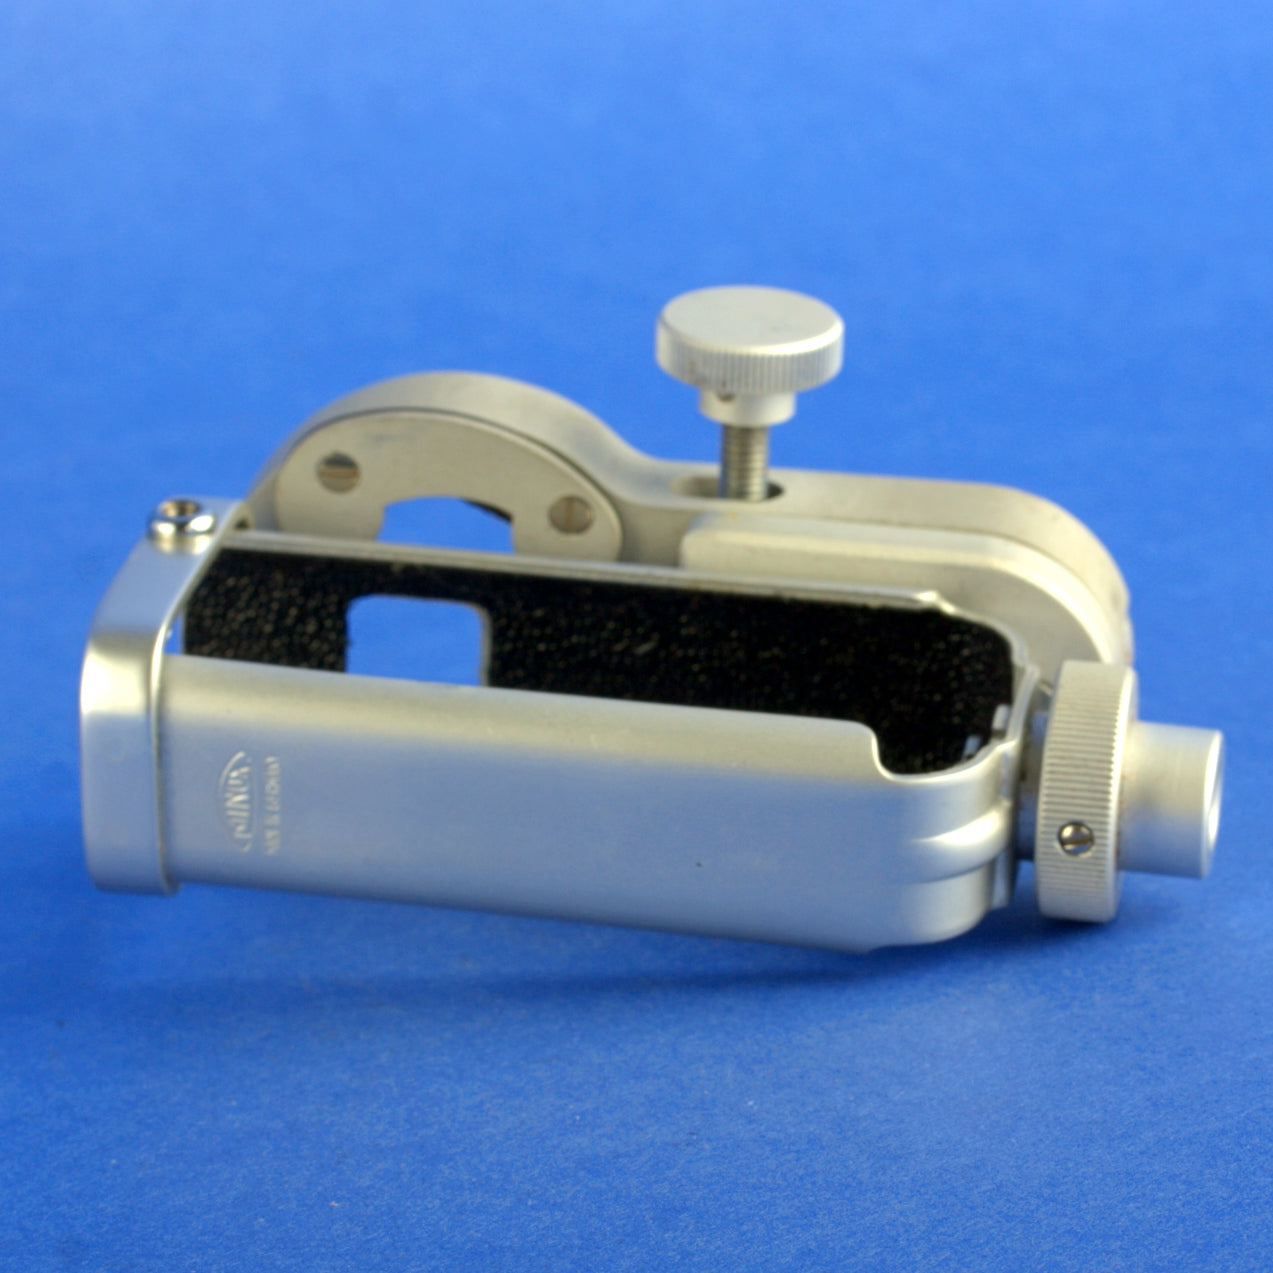 Minox Field Cutter Binocular Attachment